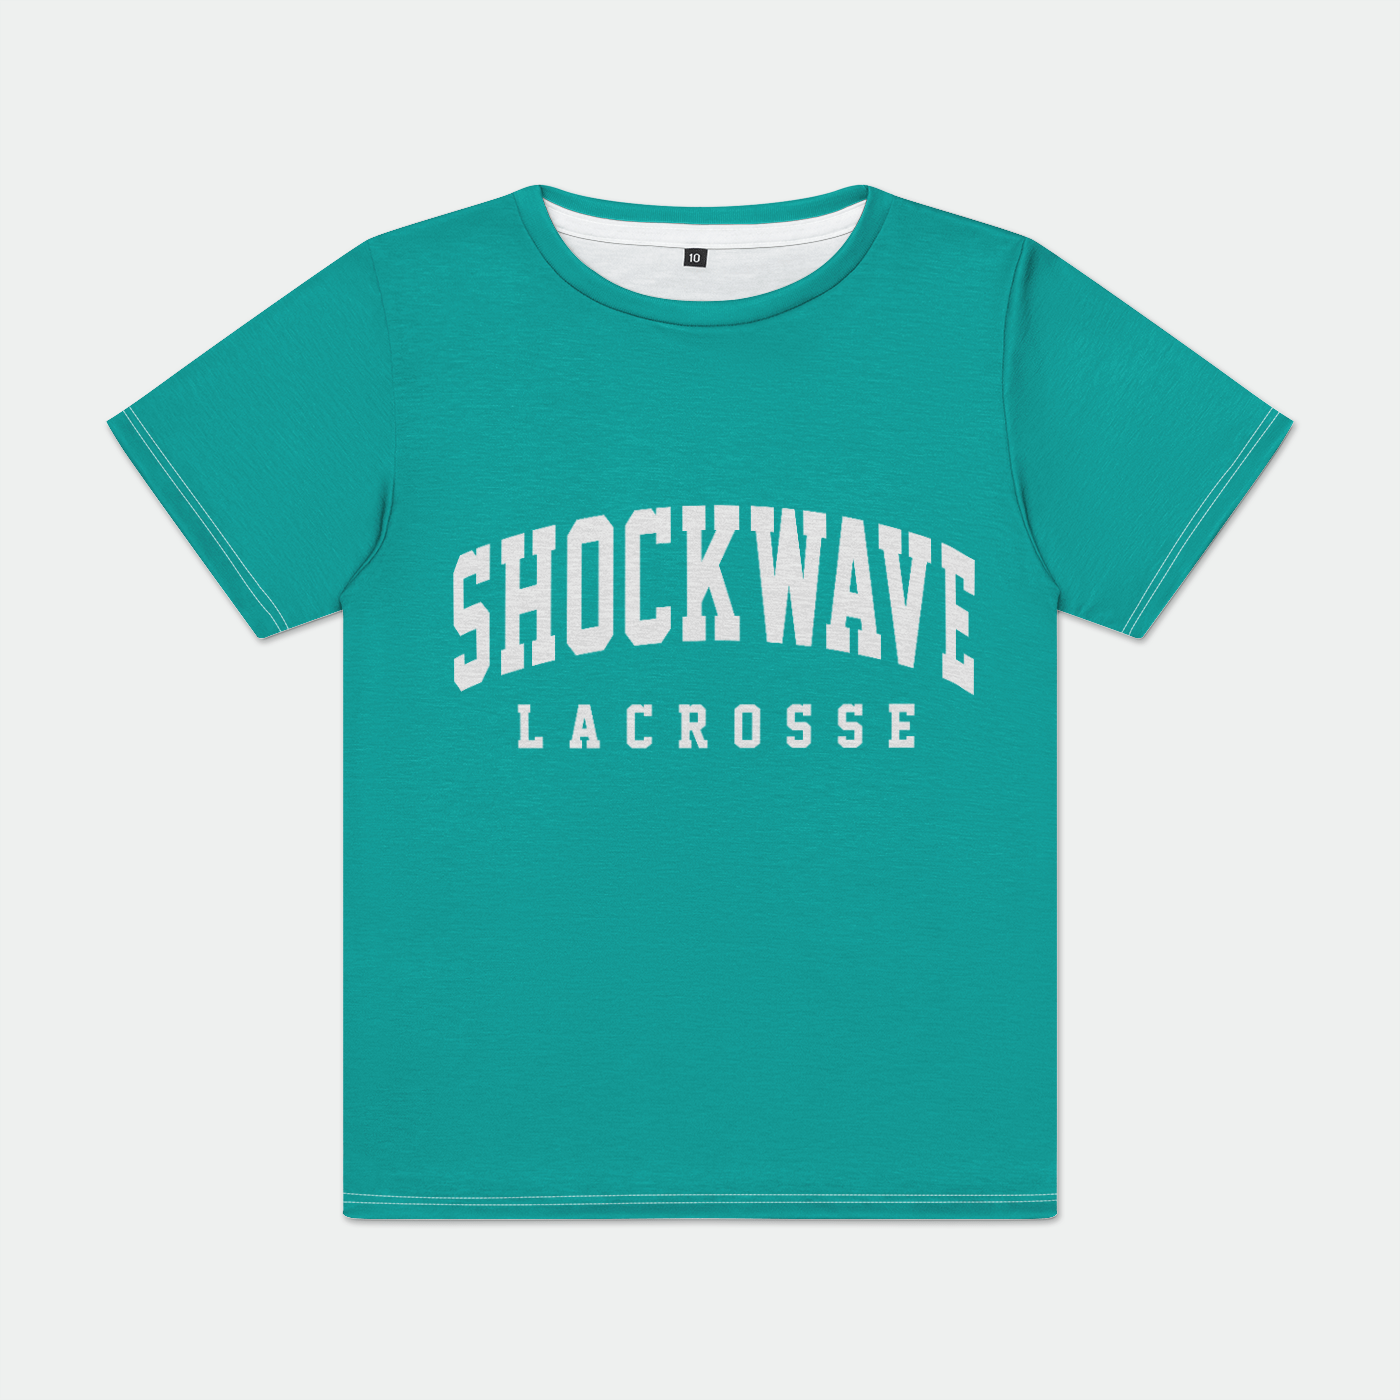 Shockwave Lacrosse Youth Sport T-Shirt Signature Lacrosse